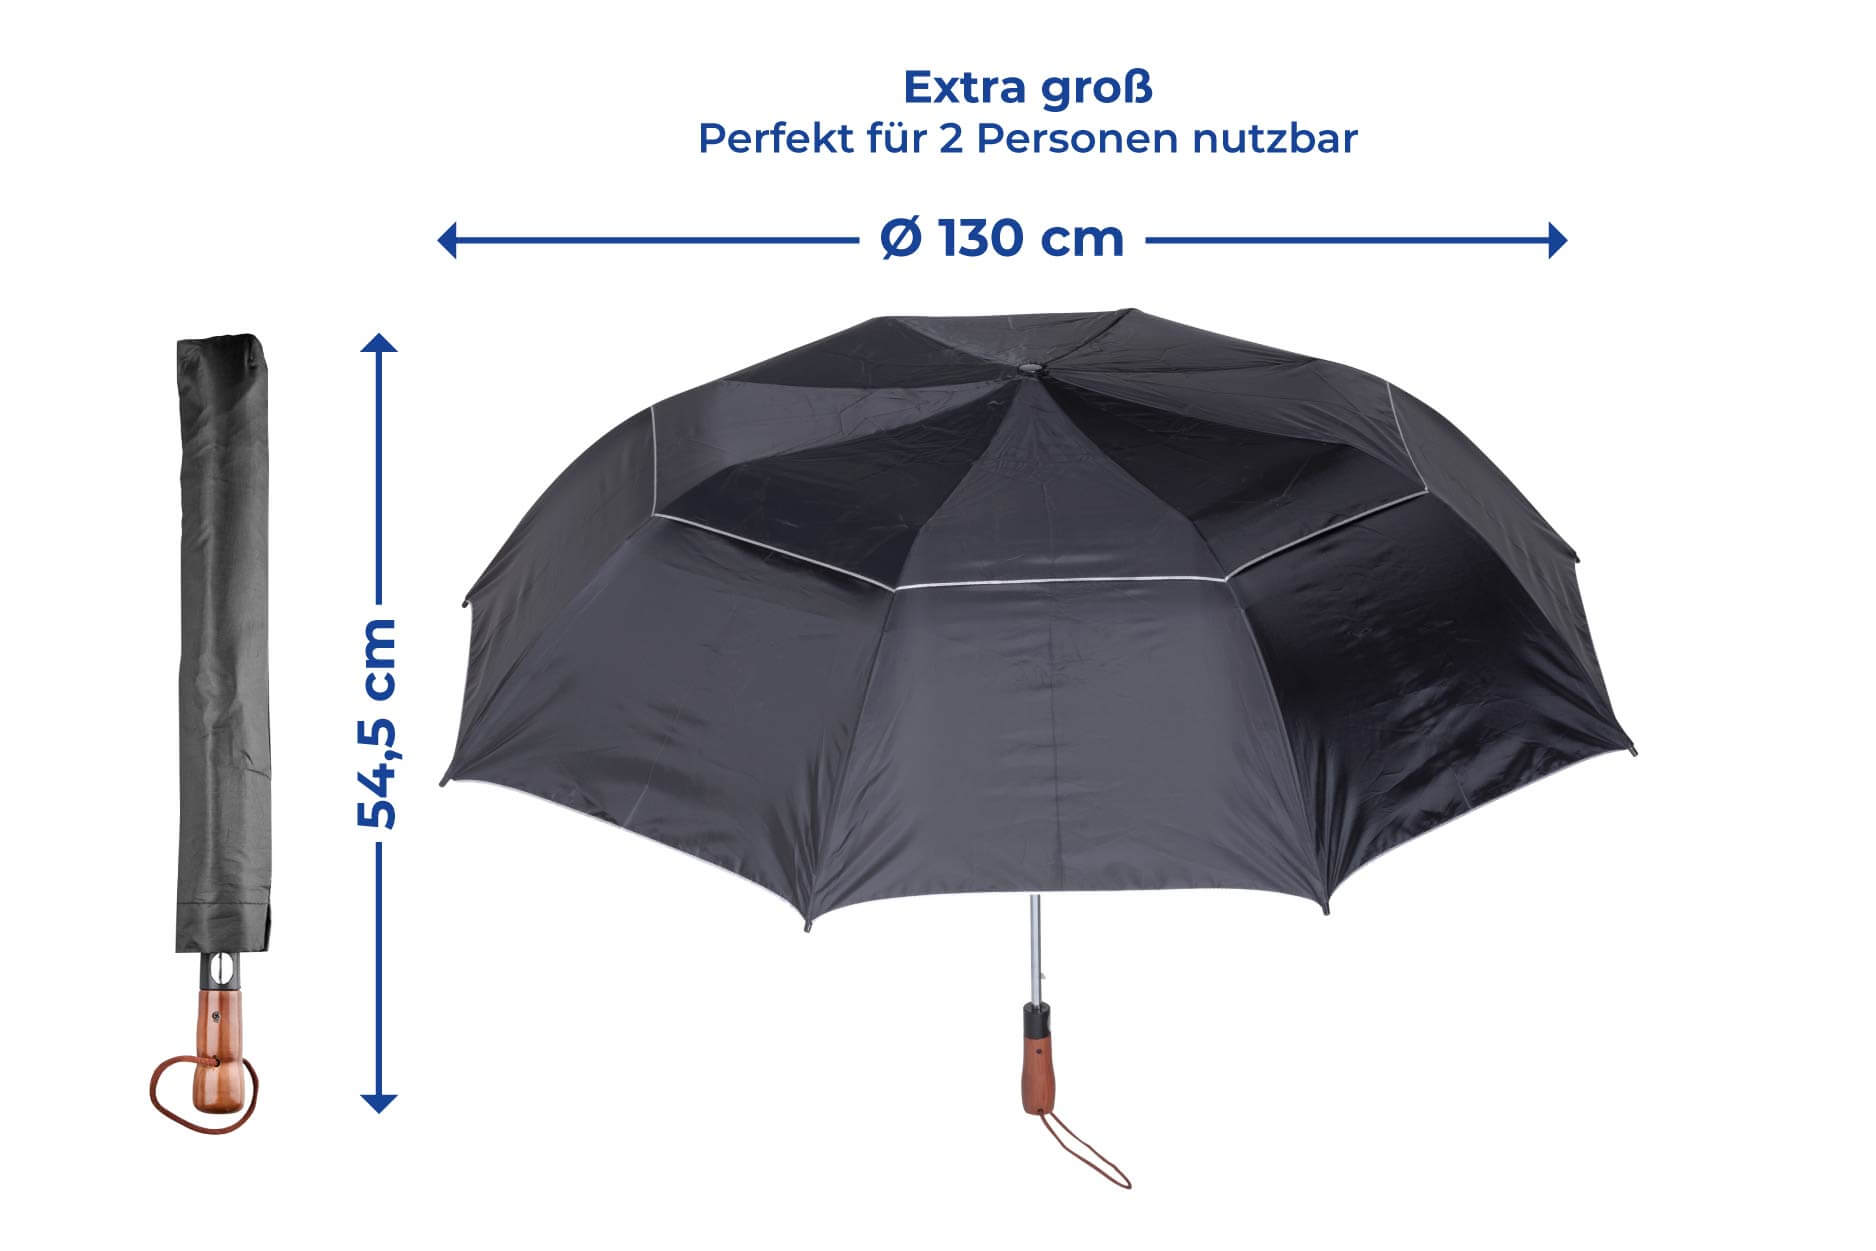 Sturm-Regenschirm Kyrill